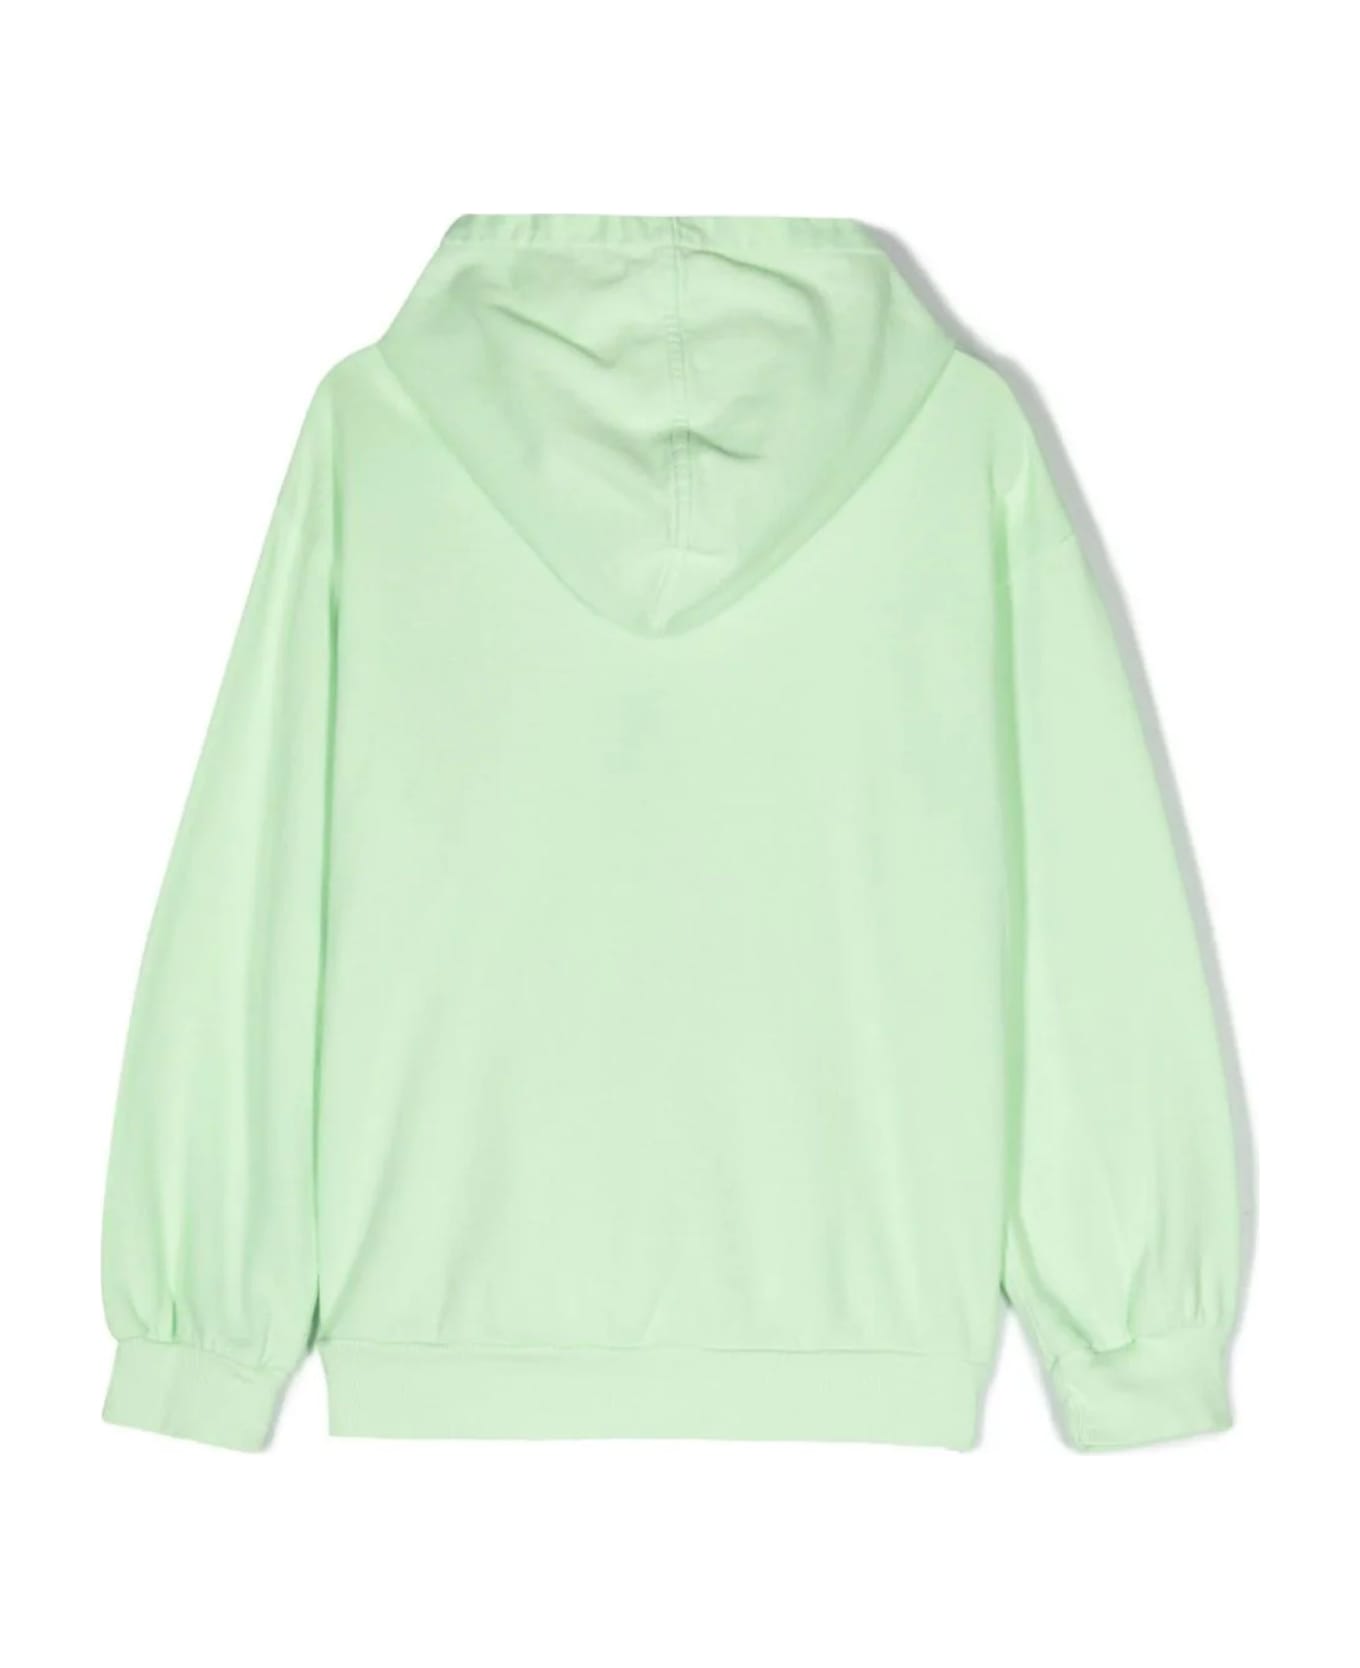 Bobo Choses Sweaters Green - Green